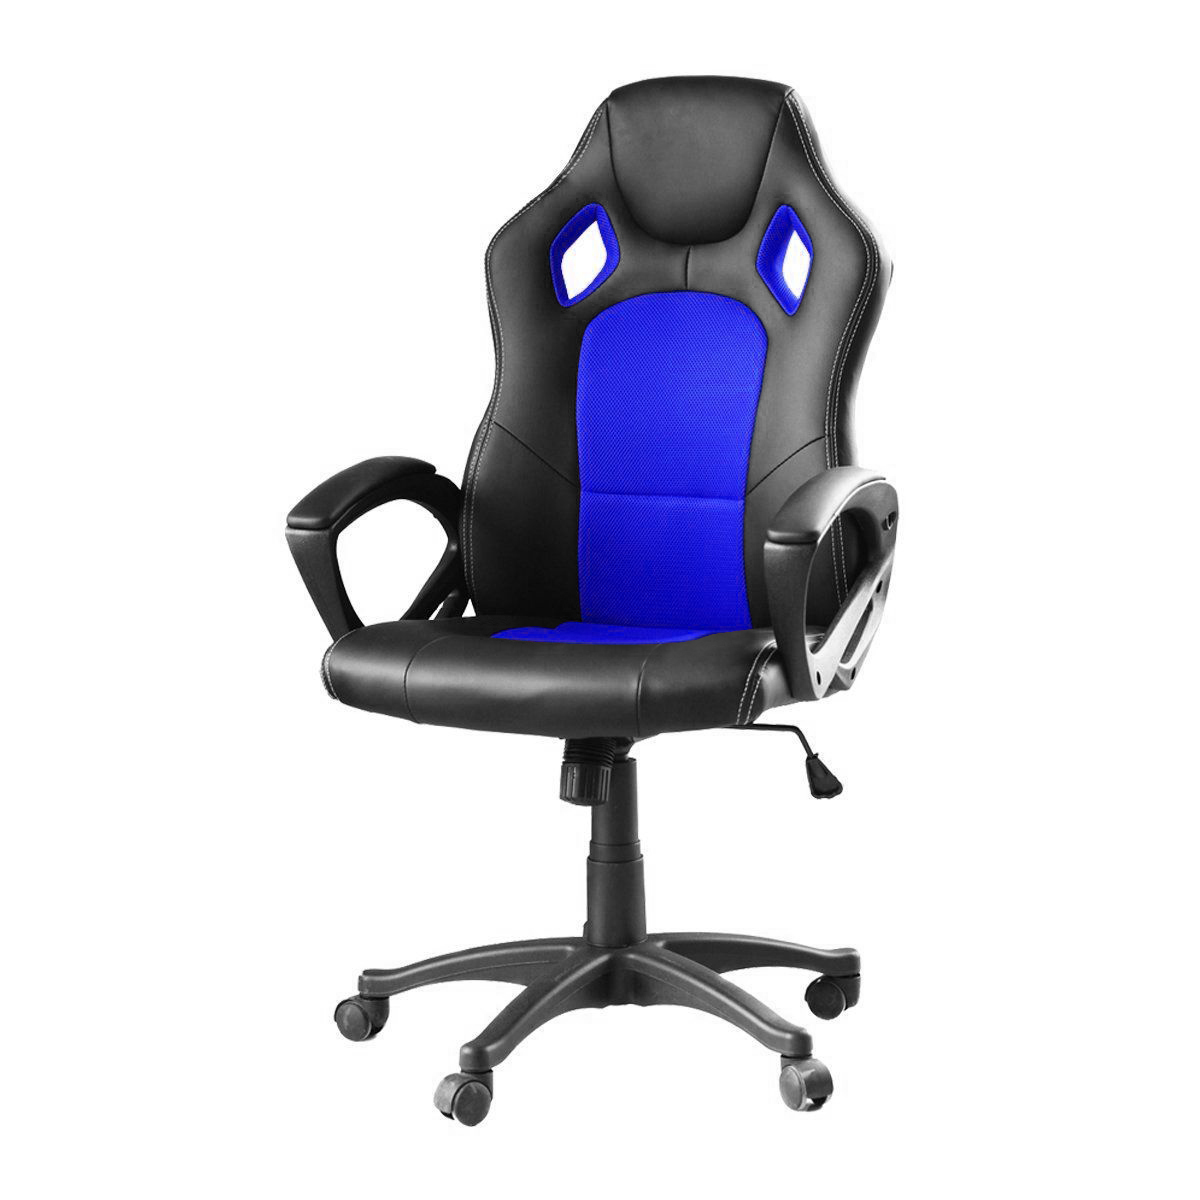 Scaun gamer Basic cu spatar color, Albastru